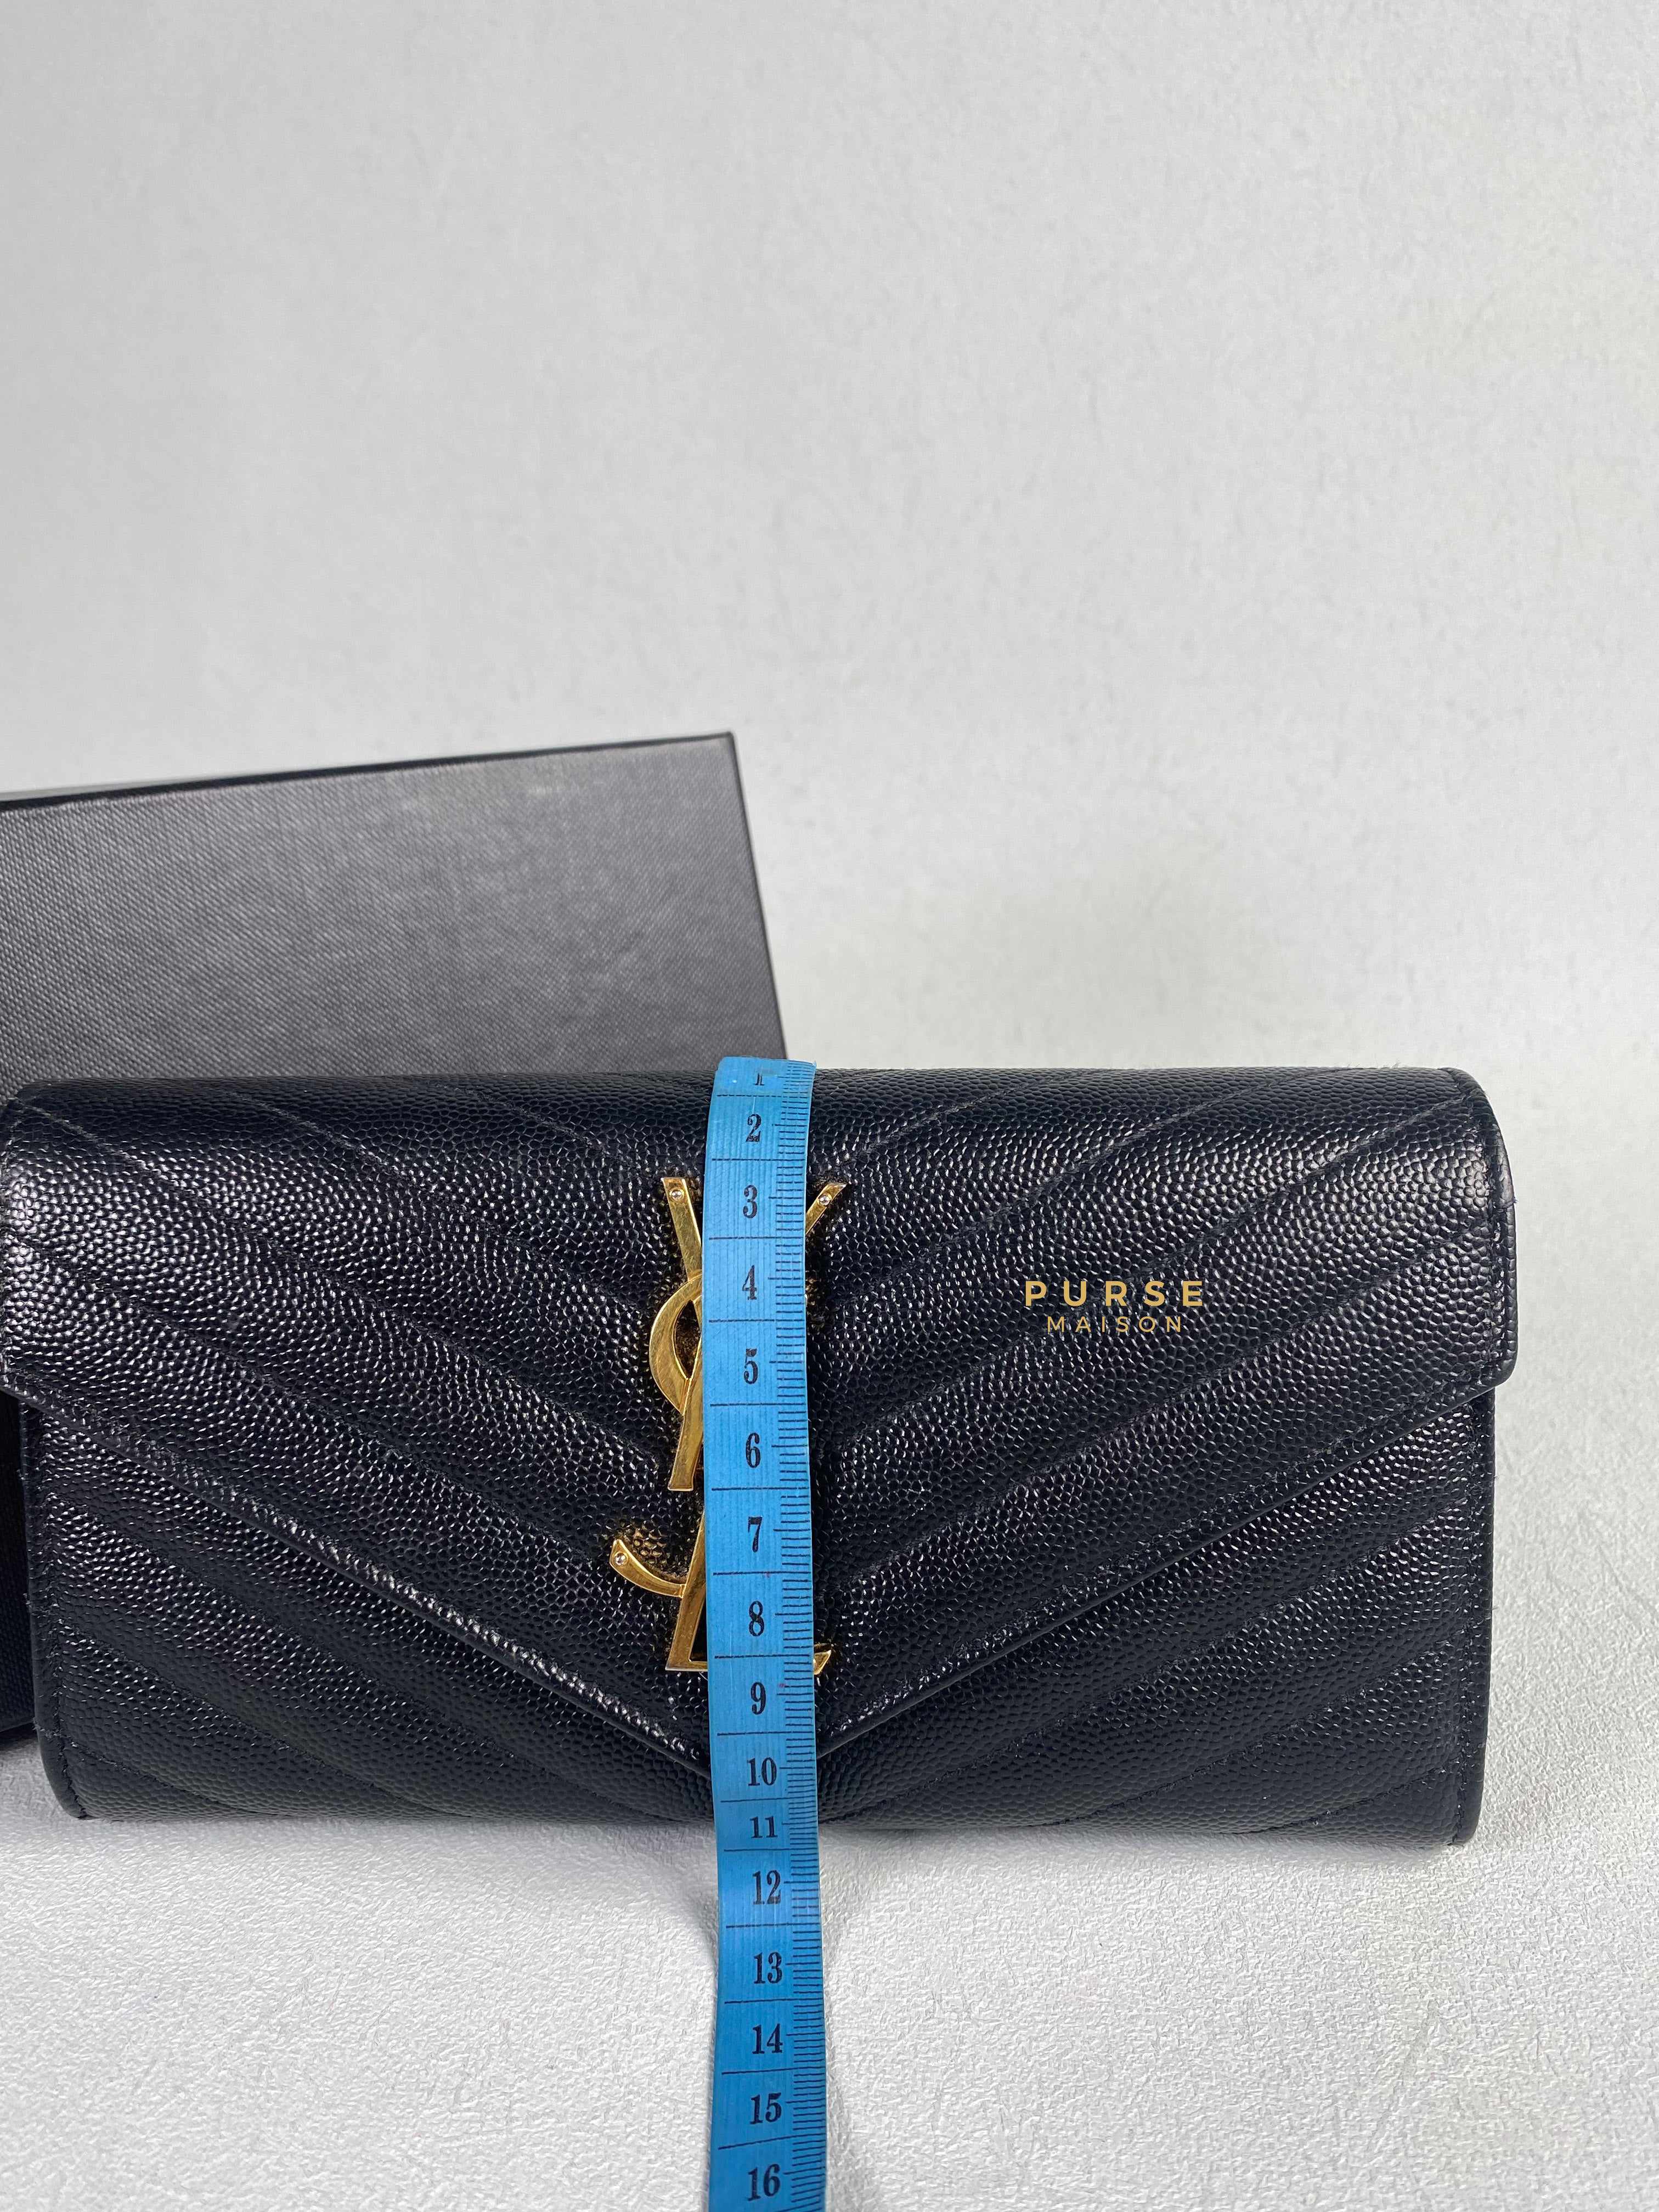 YSL Flap Long Wallet in Black Monogram Grain Leather | Purse Maison Luxury Bags Shop